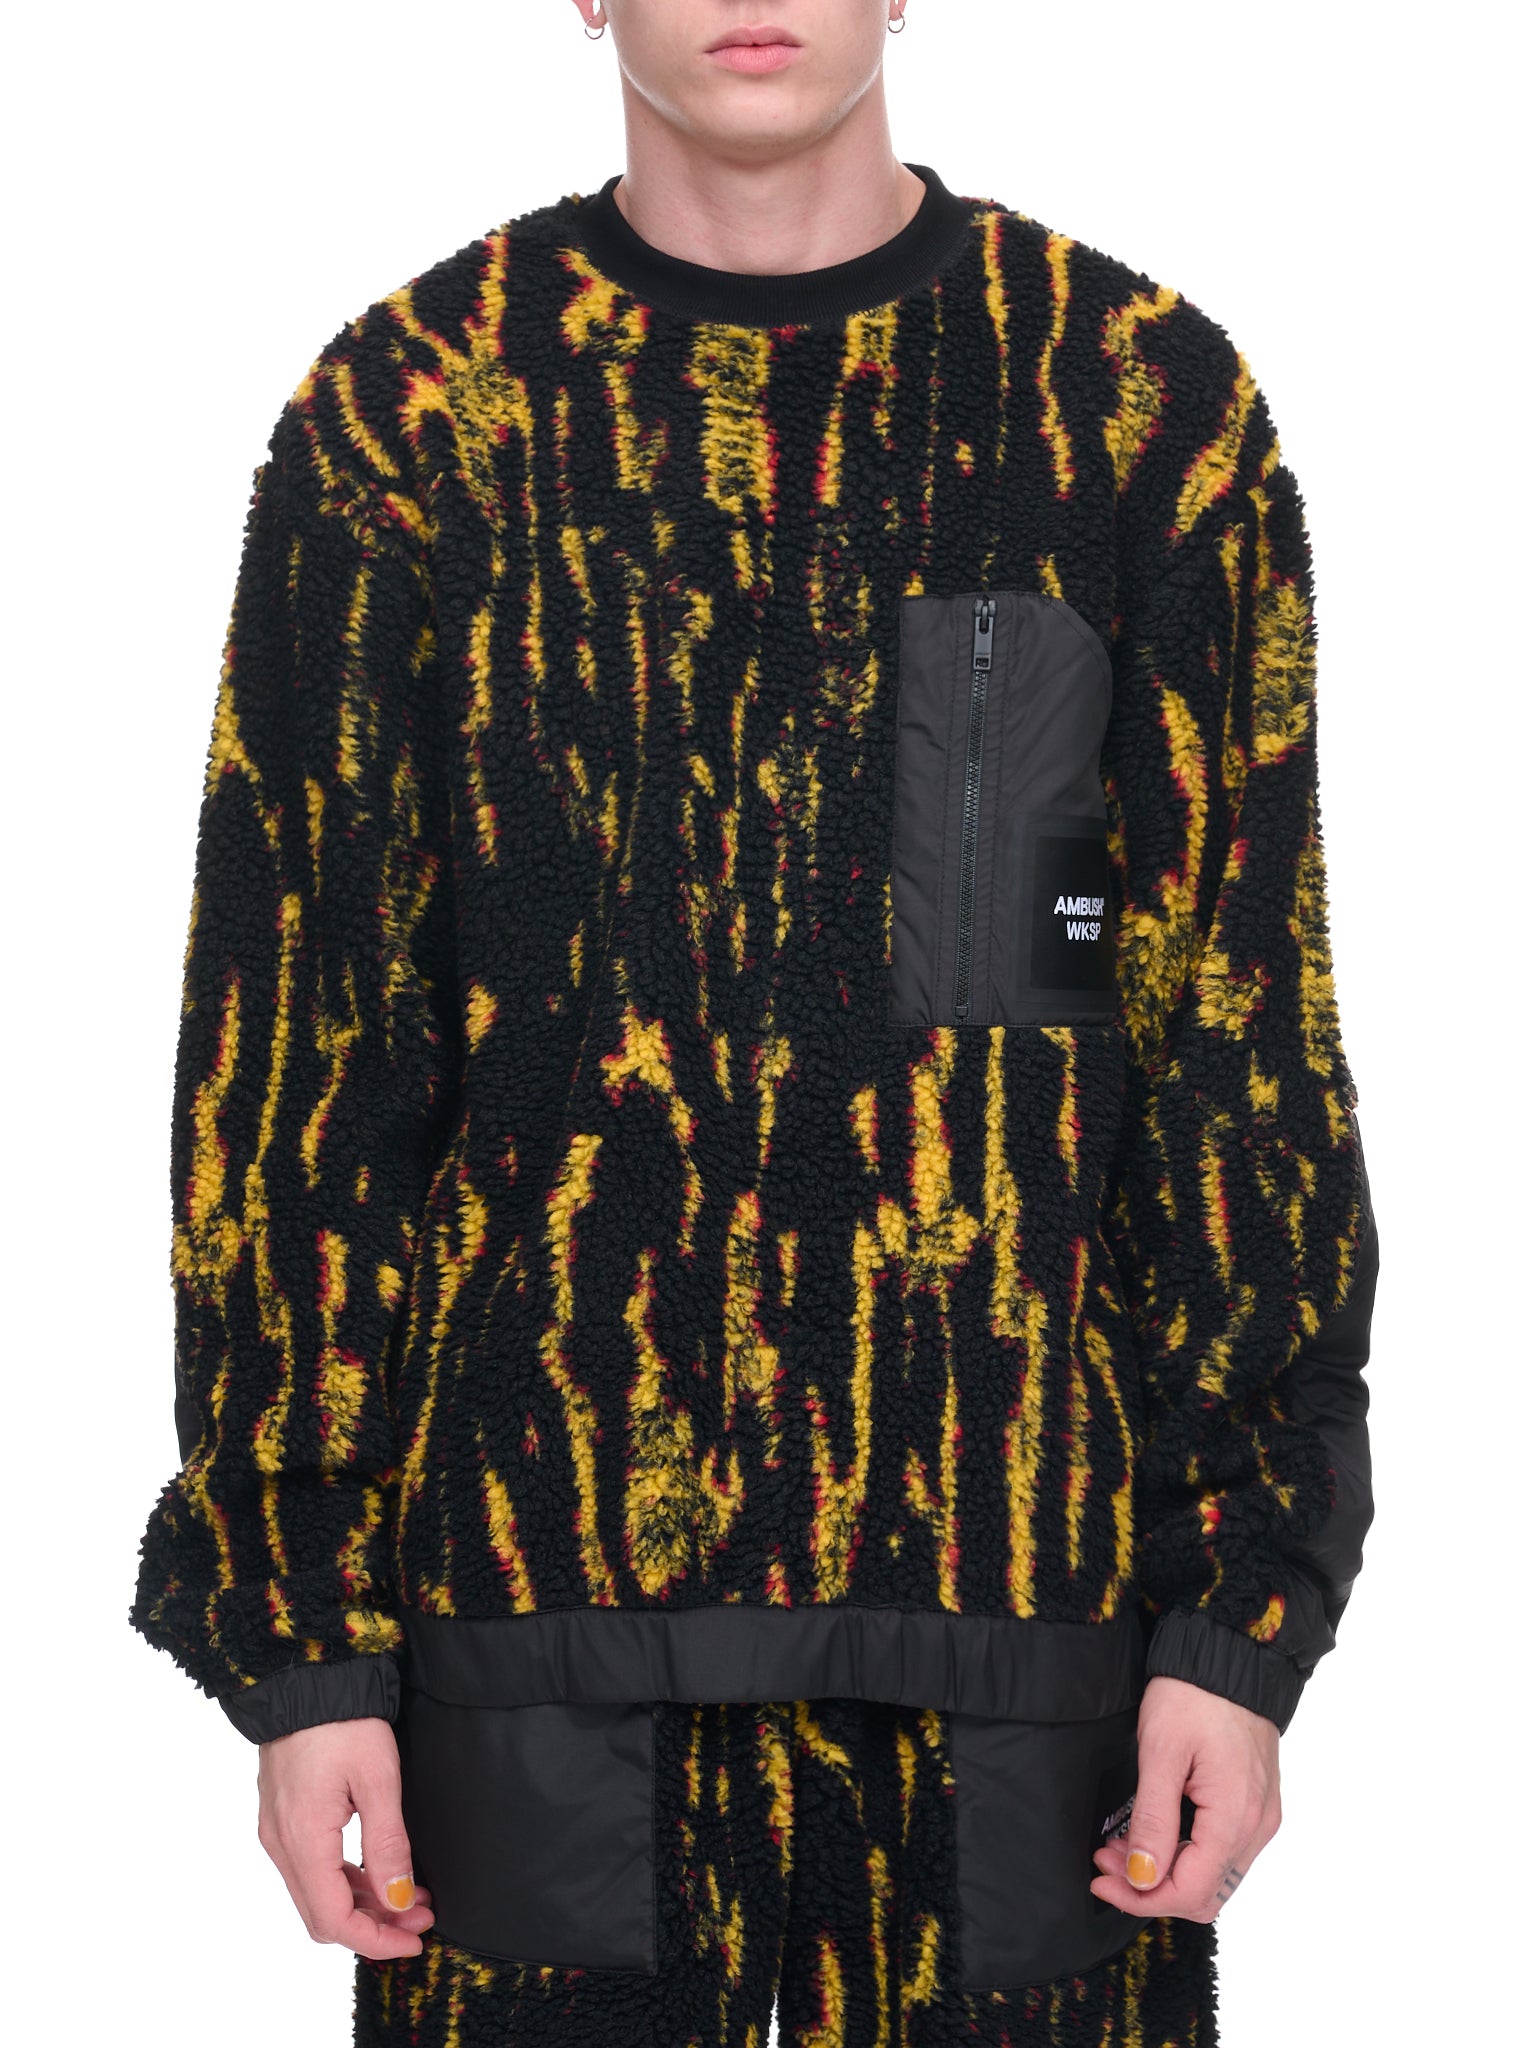 Acne Studios Leopard Jacquard Crewneck Sweater Yellow